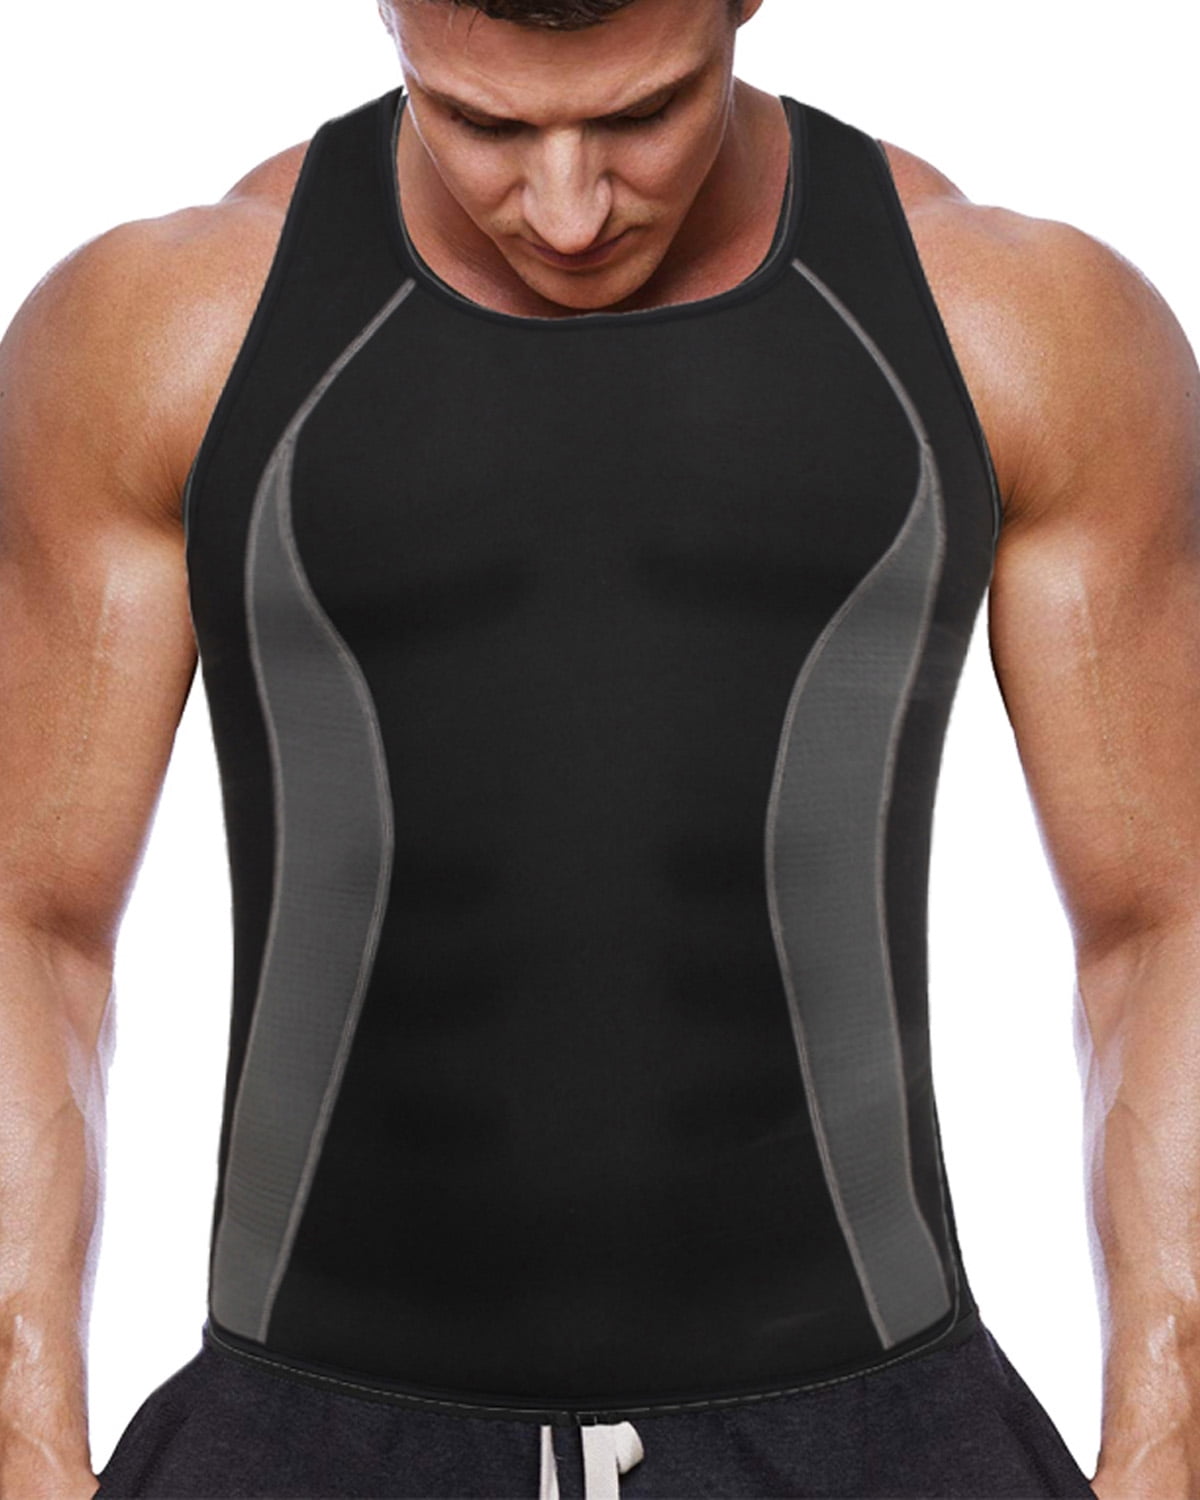 Details about   Men's Sweat Sauna Waist Trainer Zip Vest BELT Weight Loss Body Shaper Tank Top 